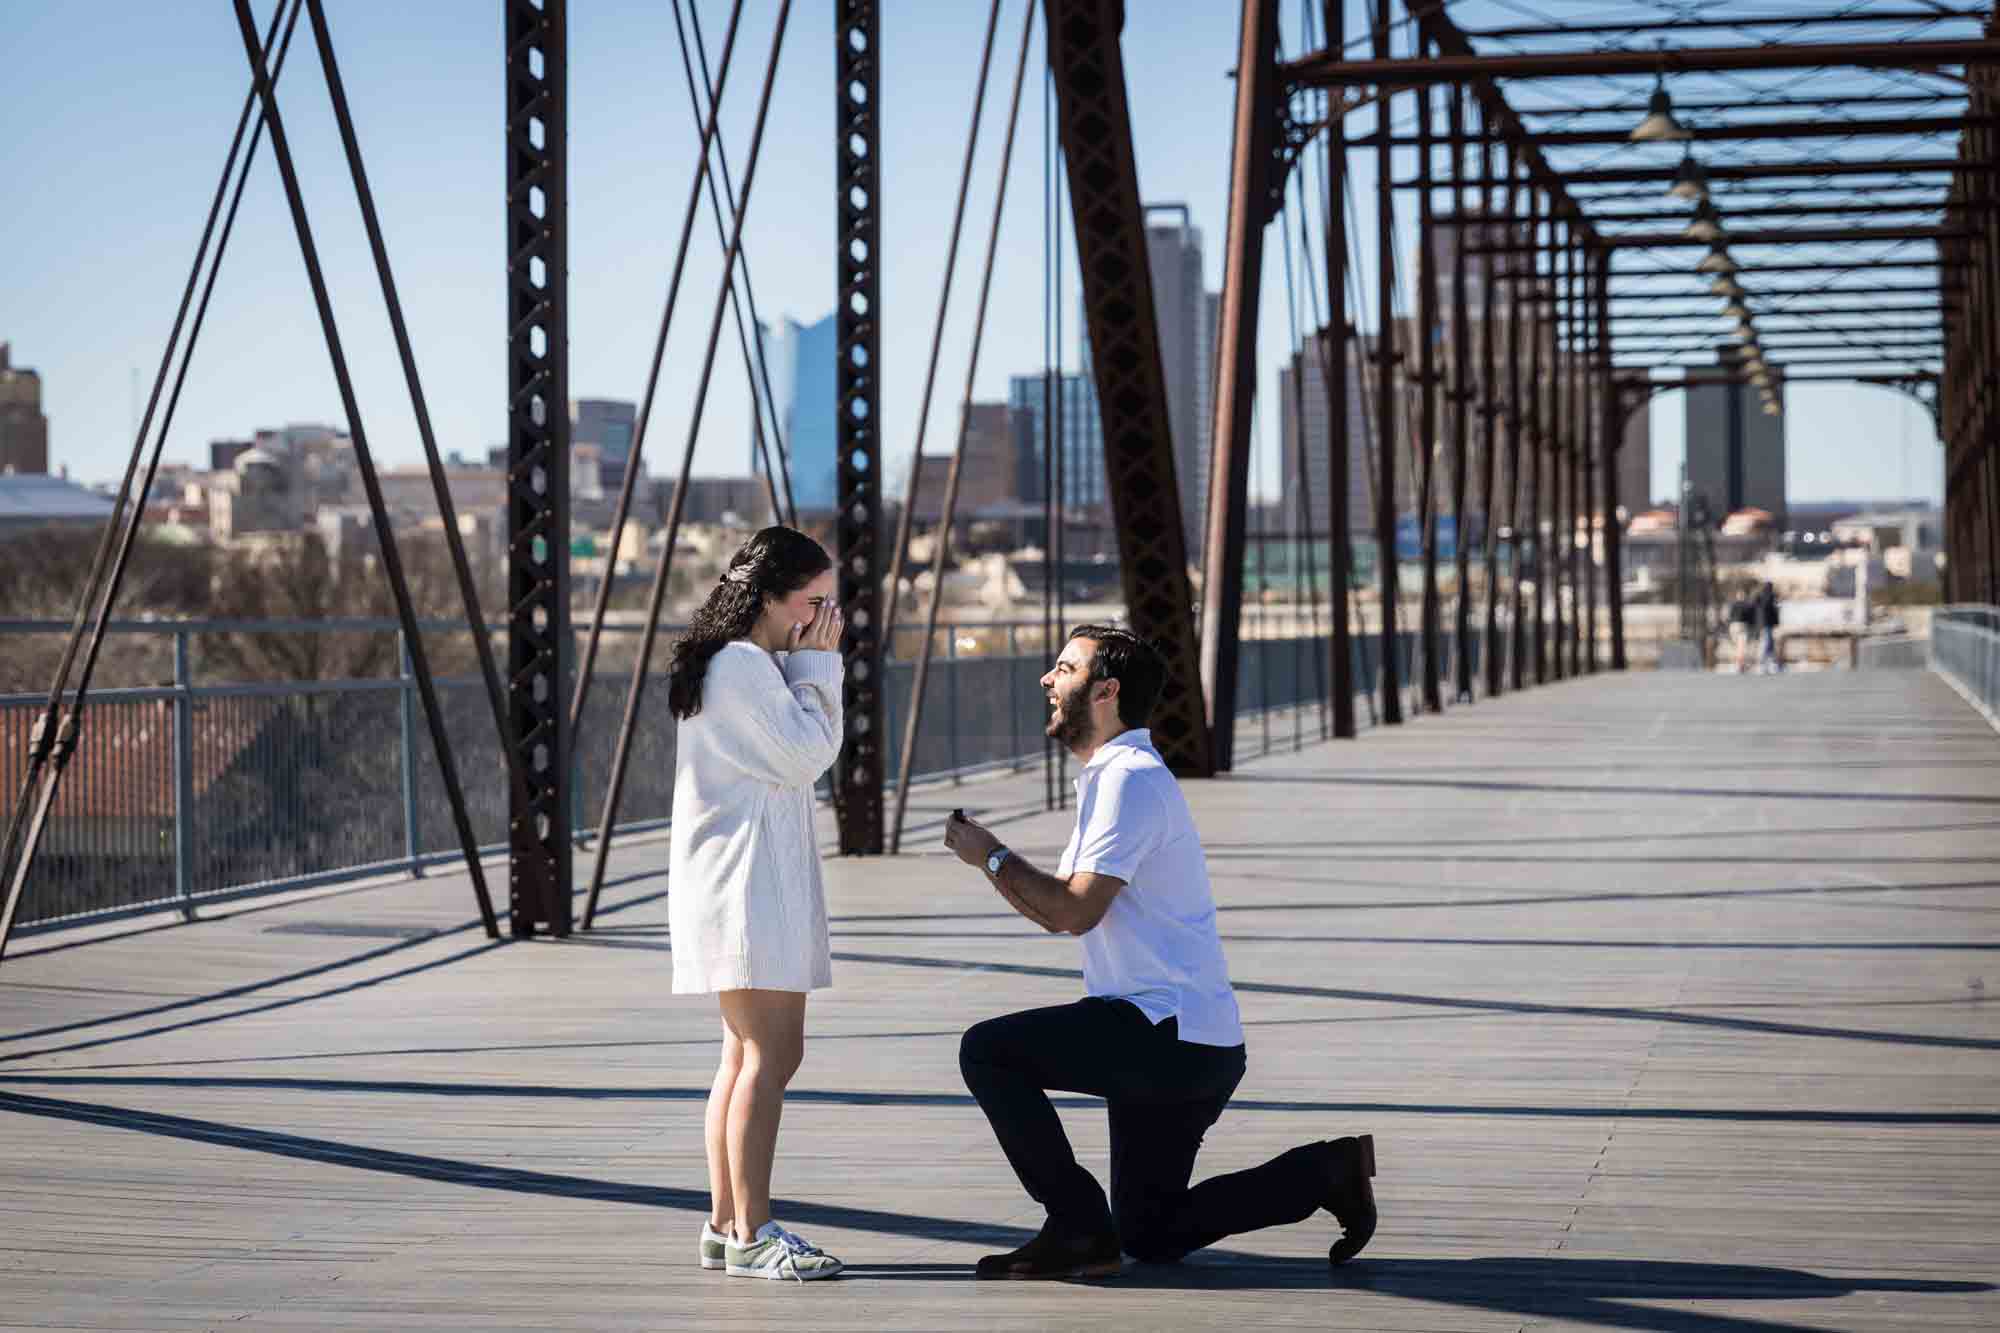 Man on bended knee proposing to woman on Hays Street Bridge by San Antonio photographer, Kelly Williams